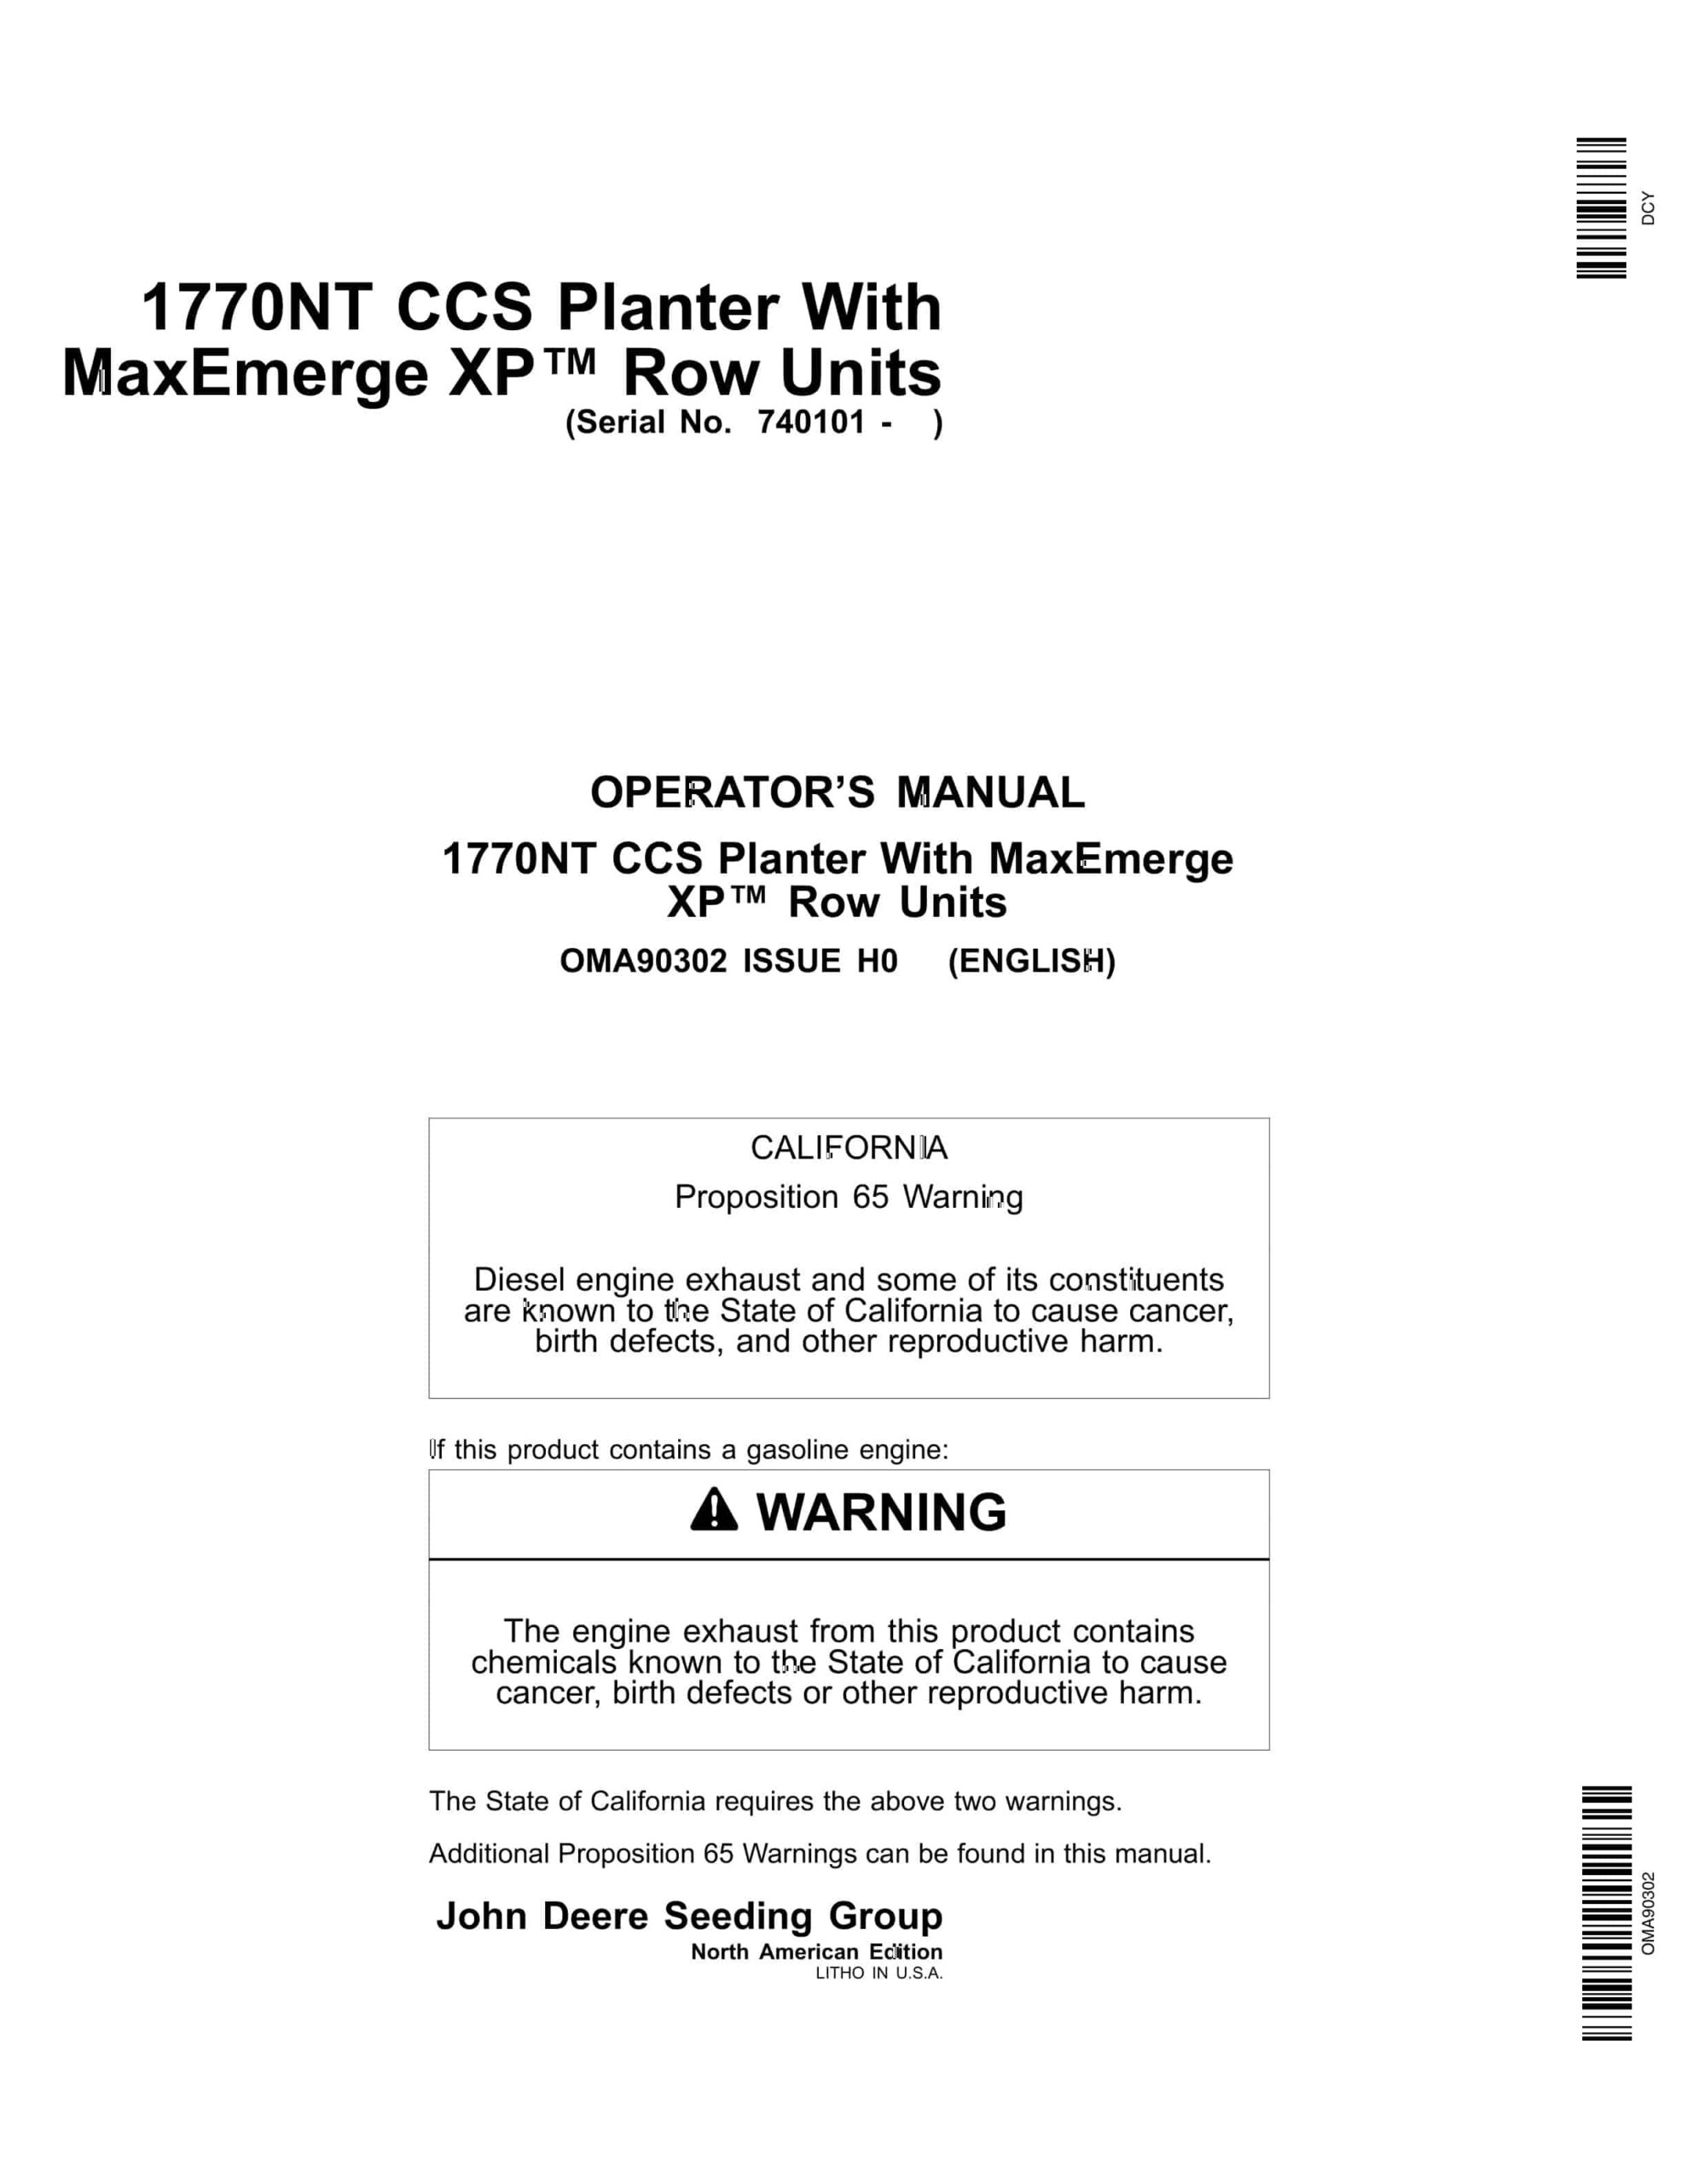 John Deere 1770NT CCS Planter With MaxEmerge XP Row Units Operator Manual OMA90302-1